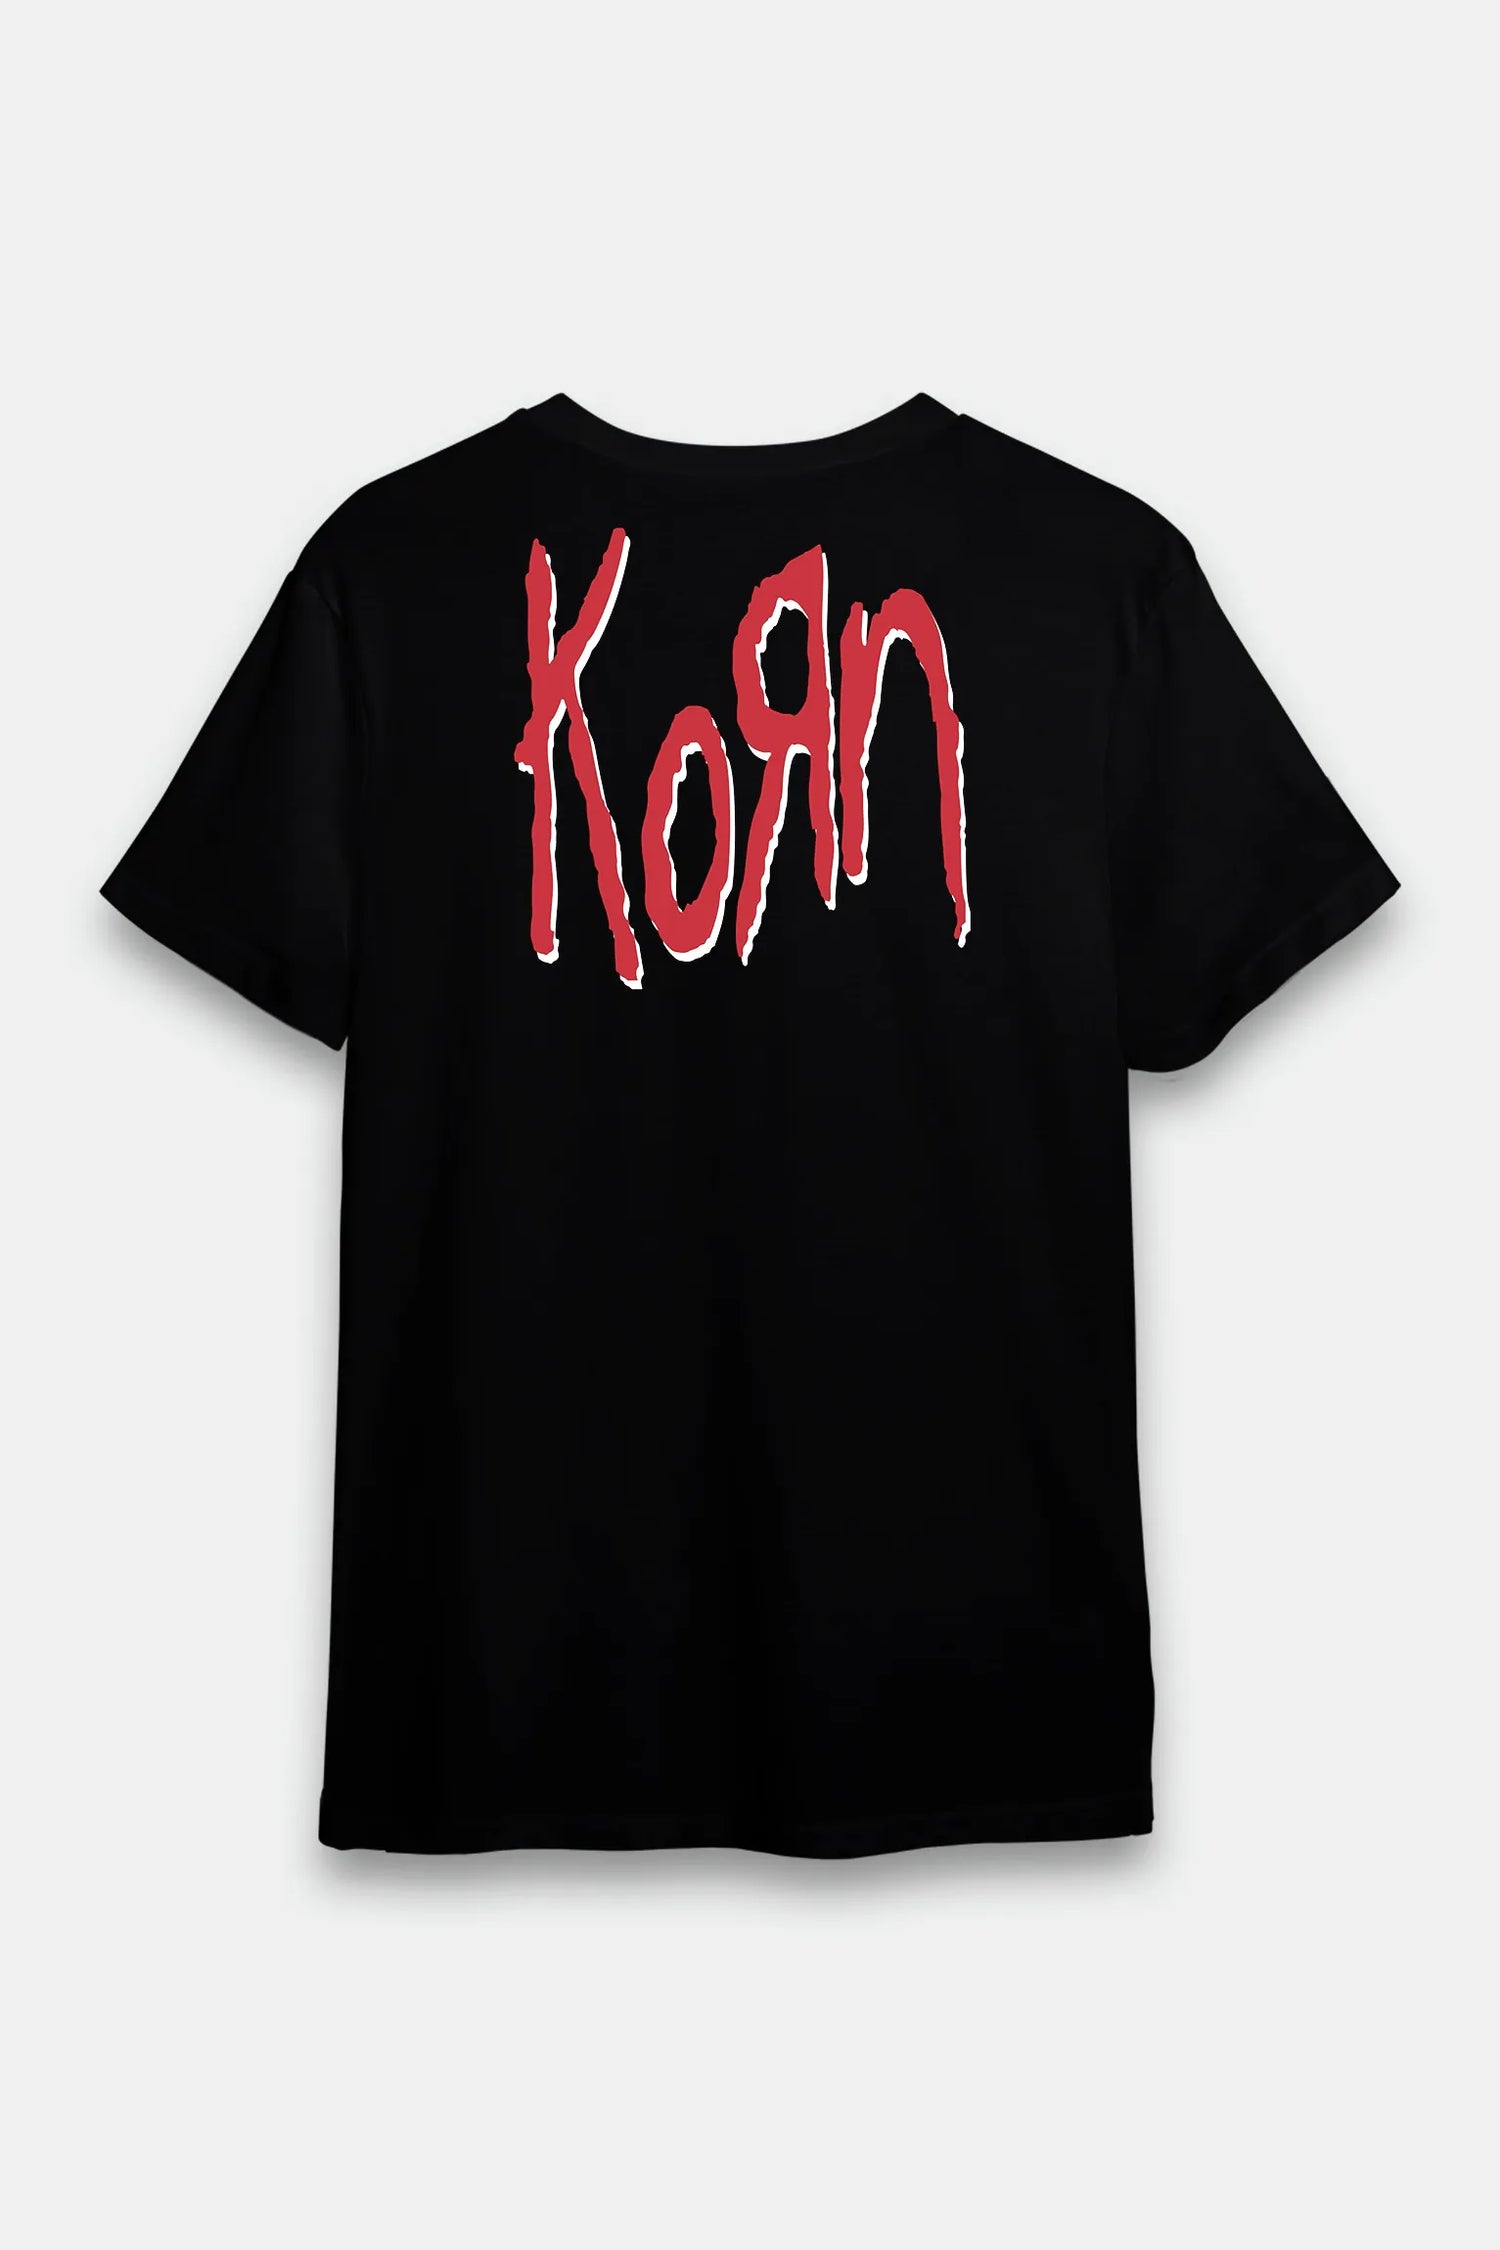 Camiseta Korn Self Titled